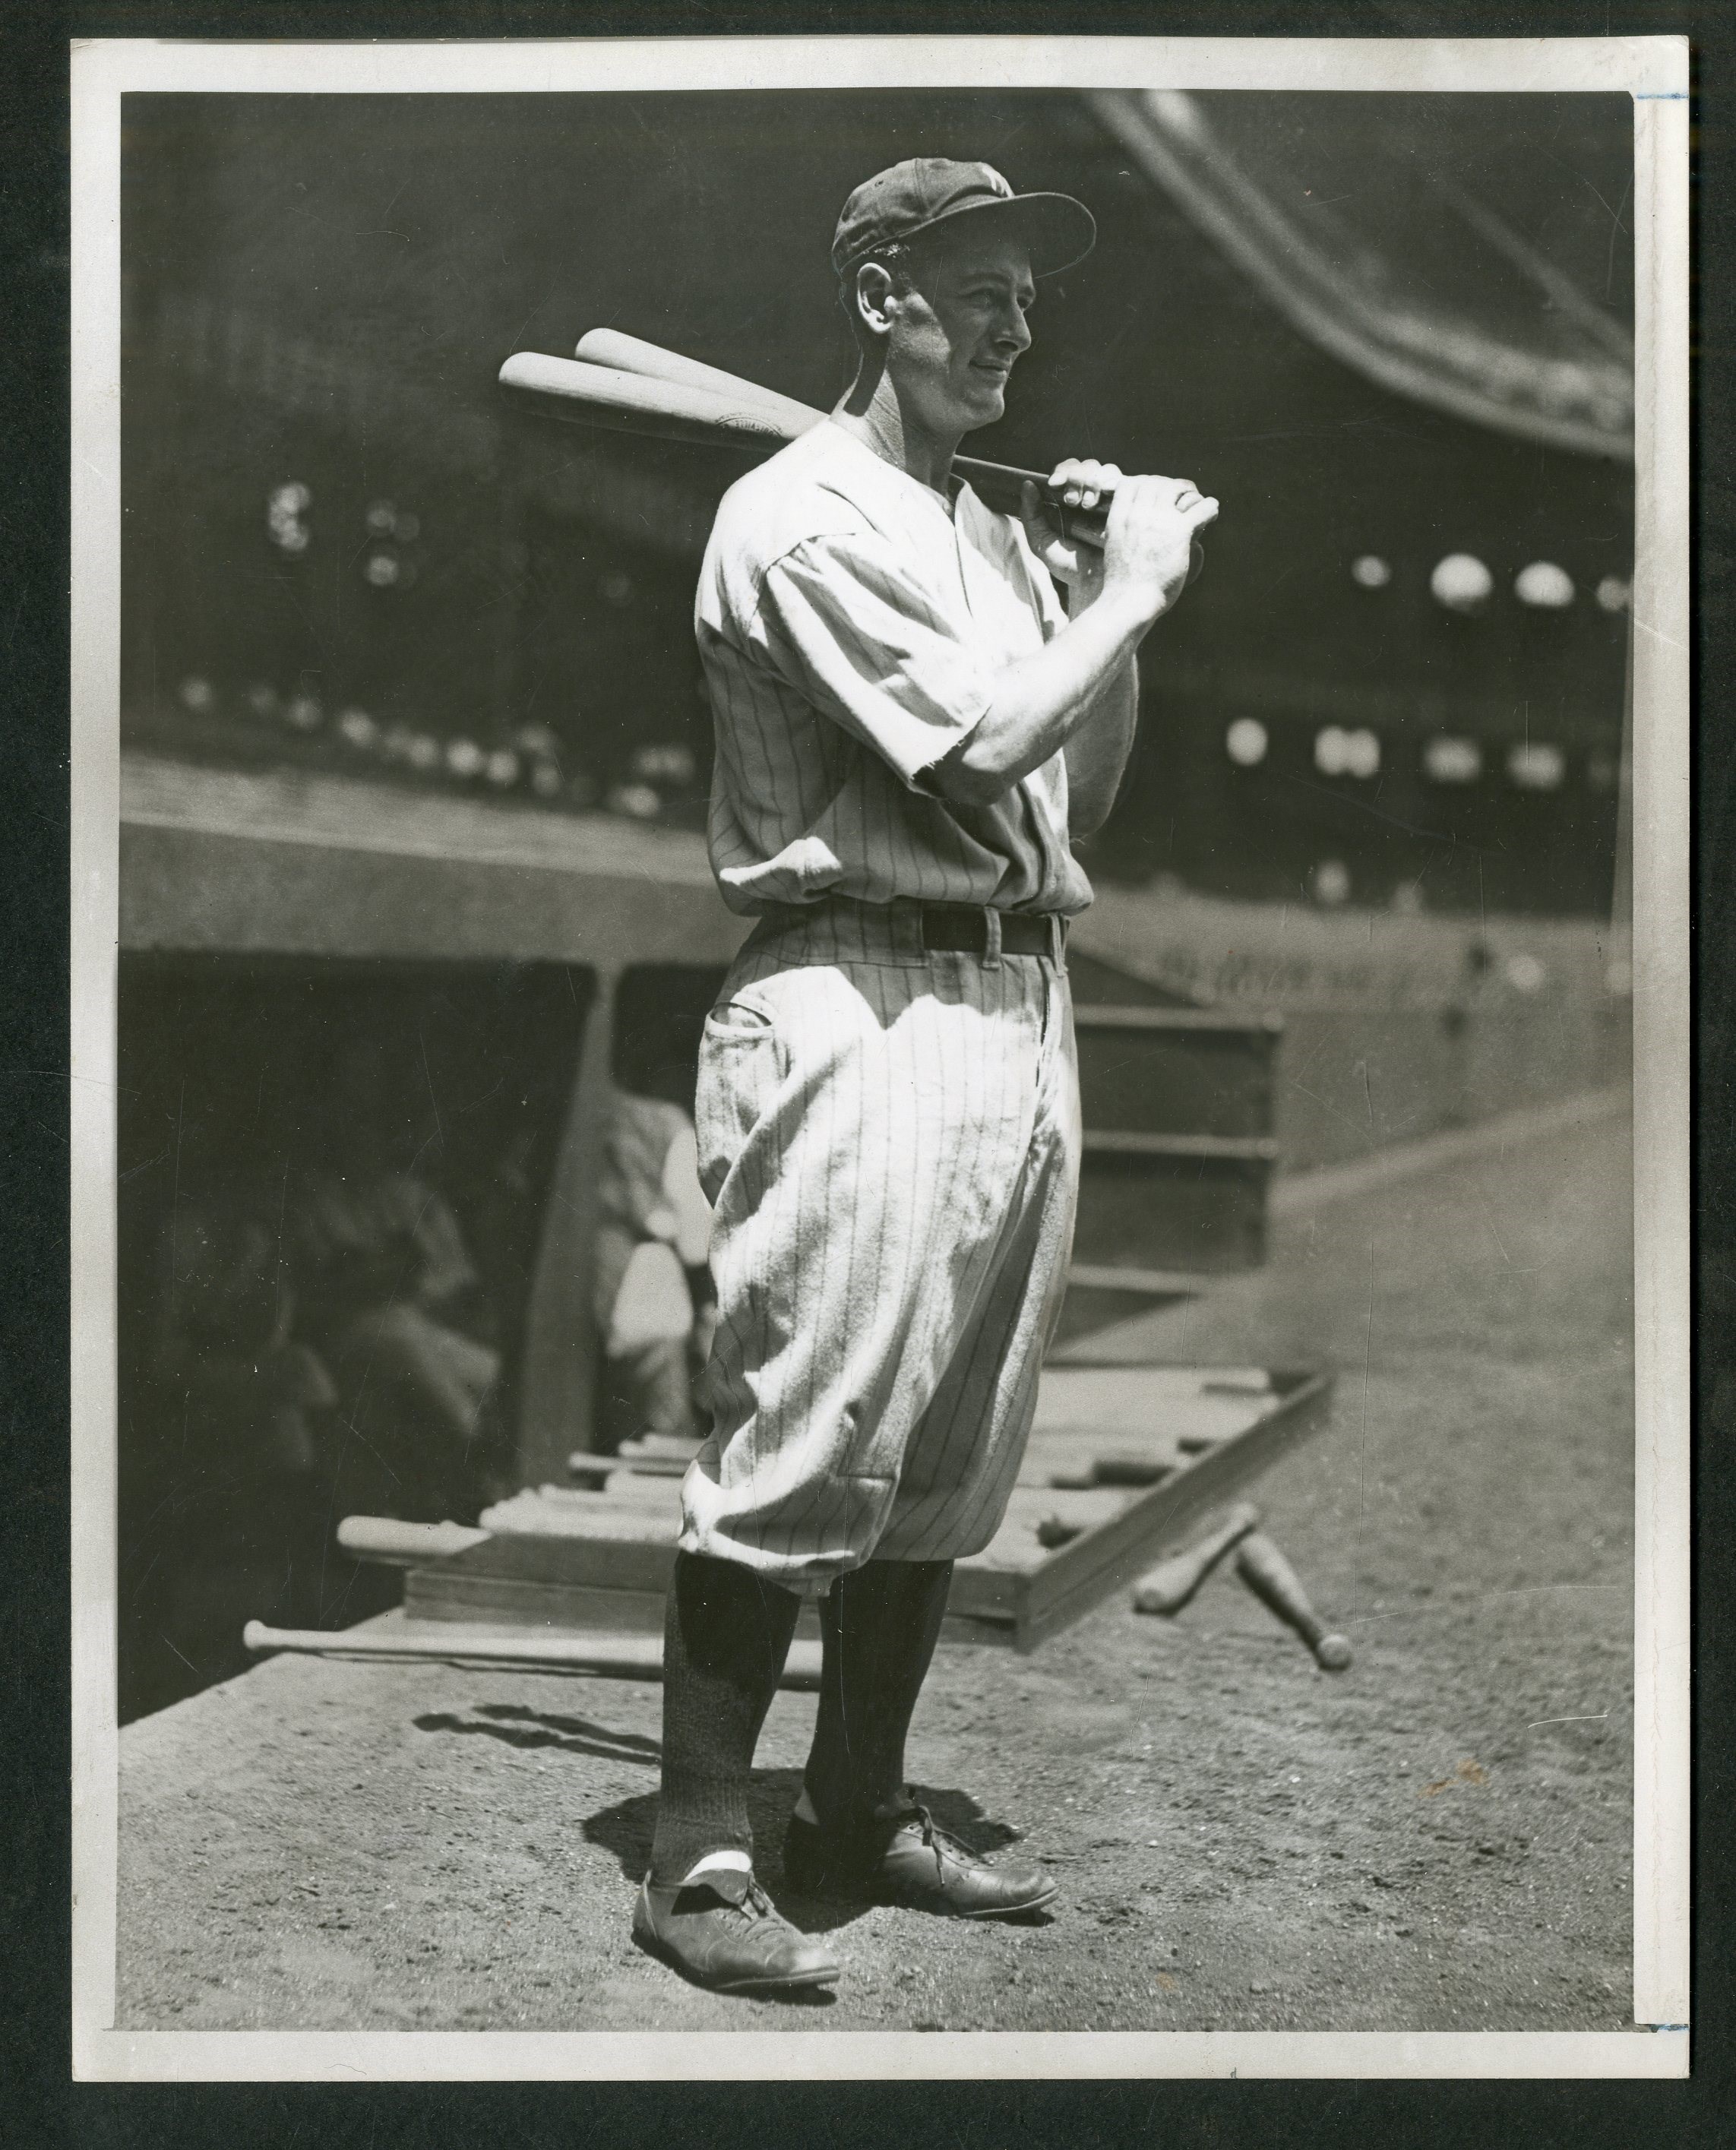 - Lou Gehrig "Bats on Shoulder" Photograph by Charles Conlon